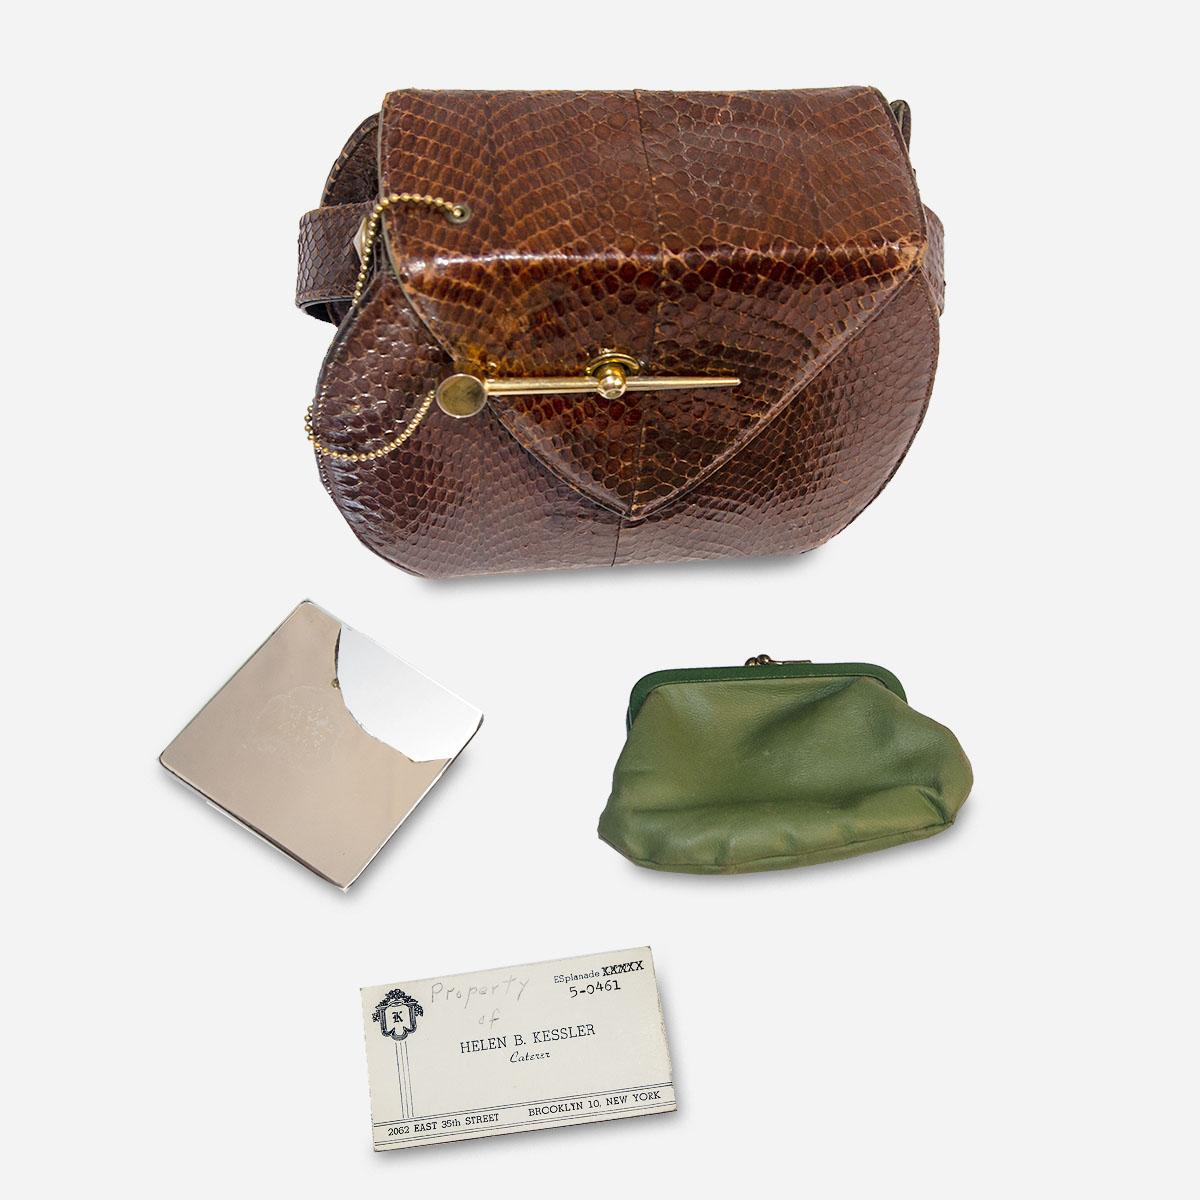 1950s handbag with coin purse and mirror